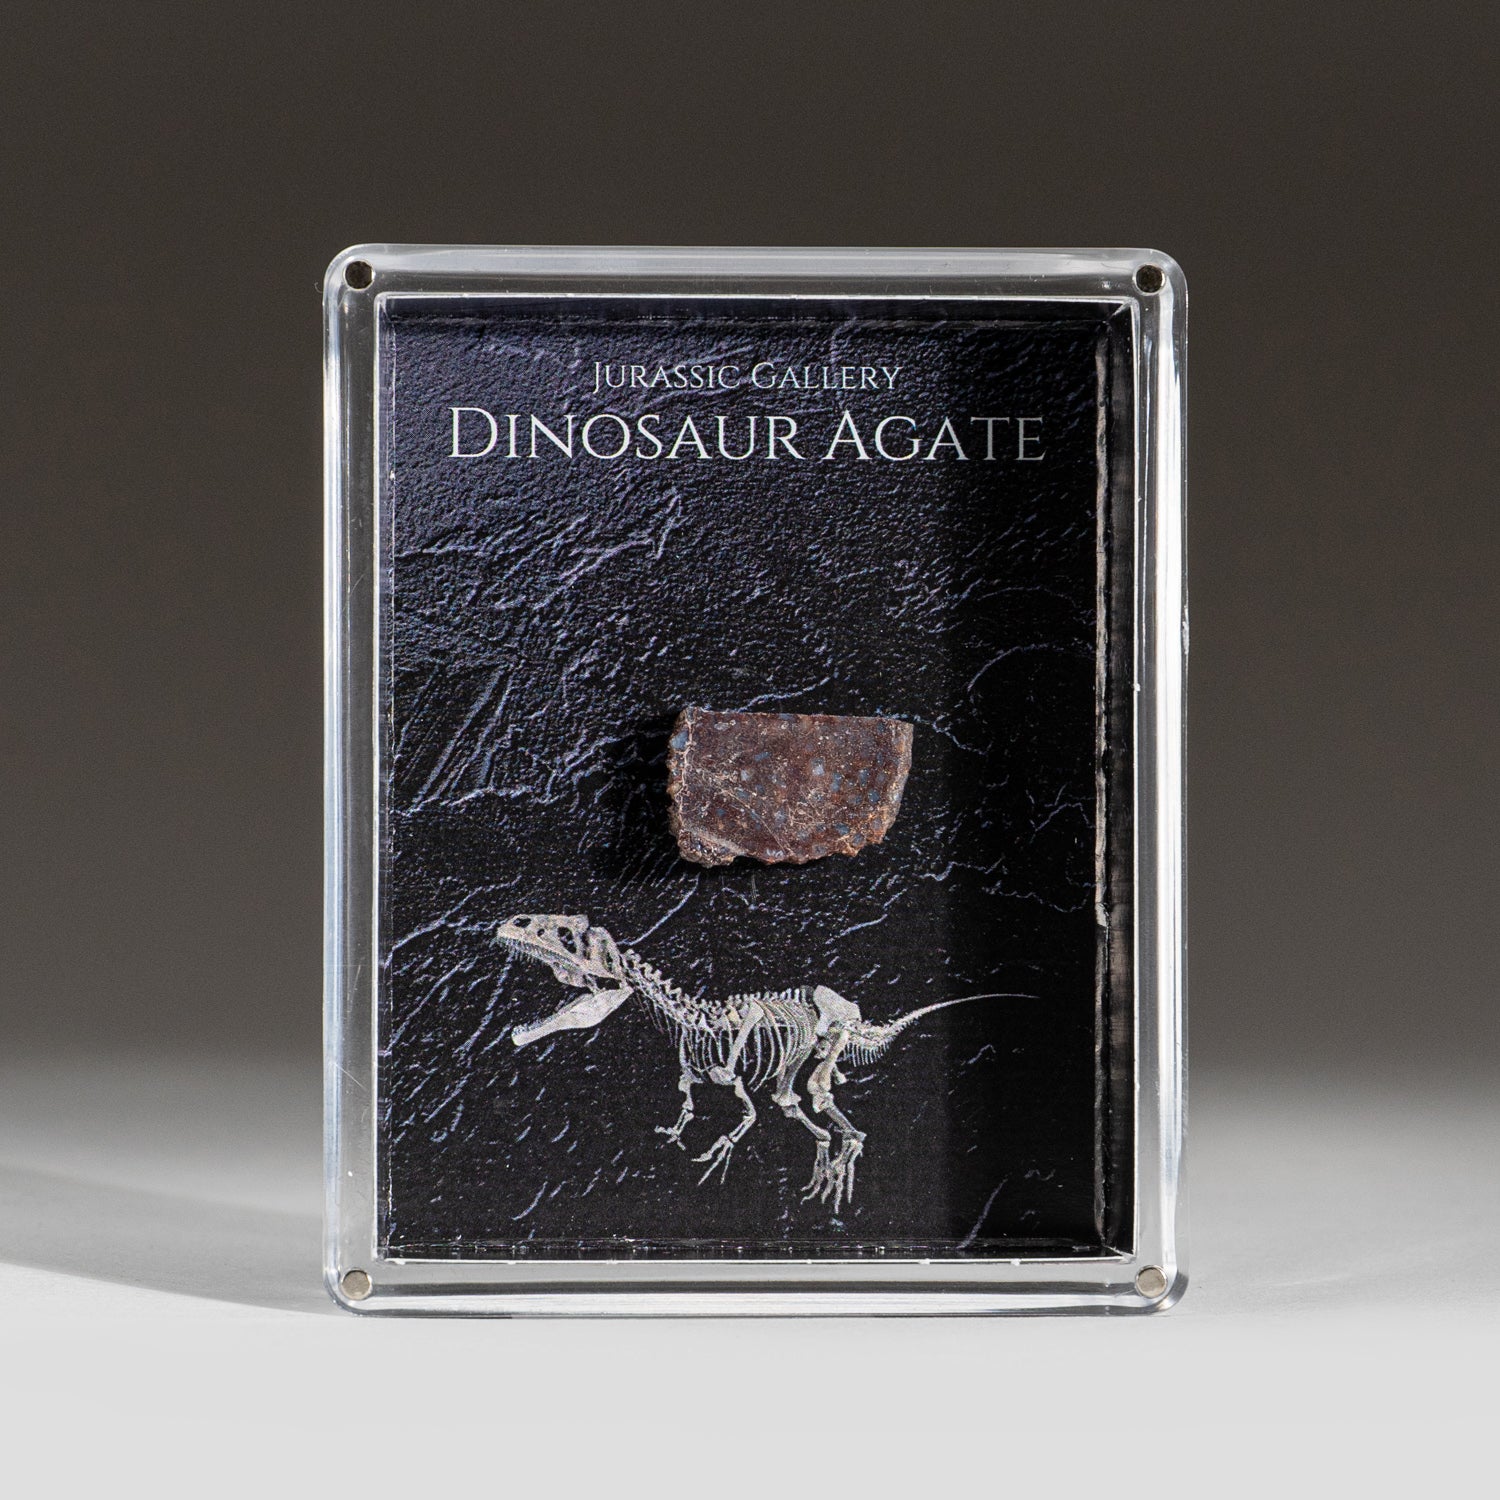 Genuine Dinosaur Agate Specimen in Acrylic Display Box